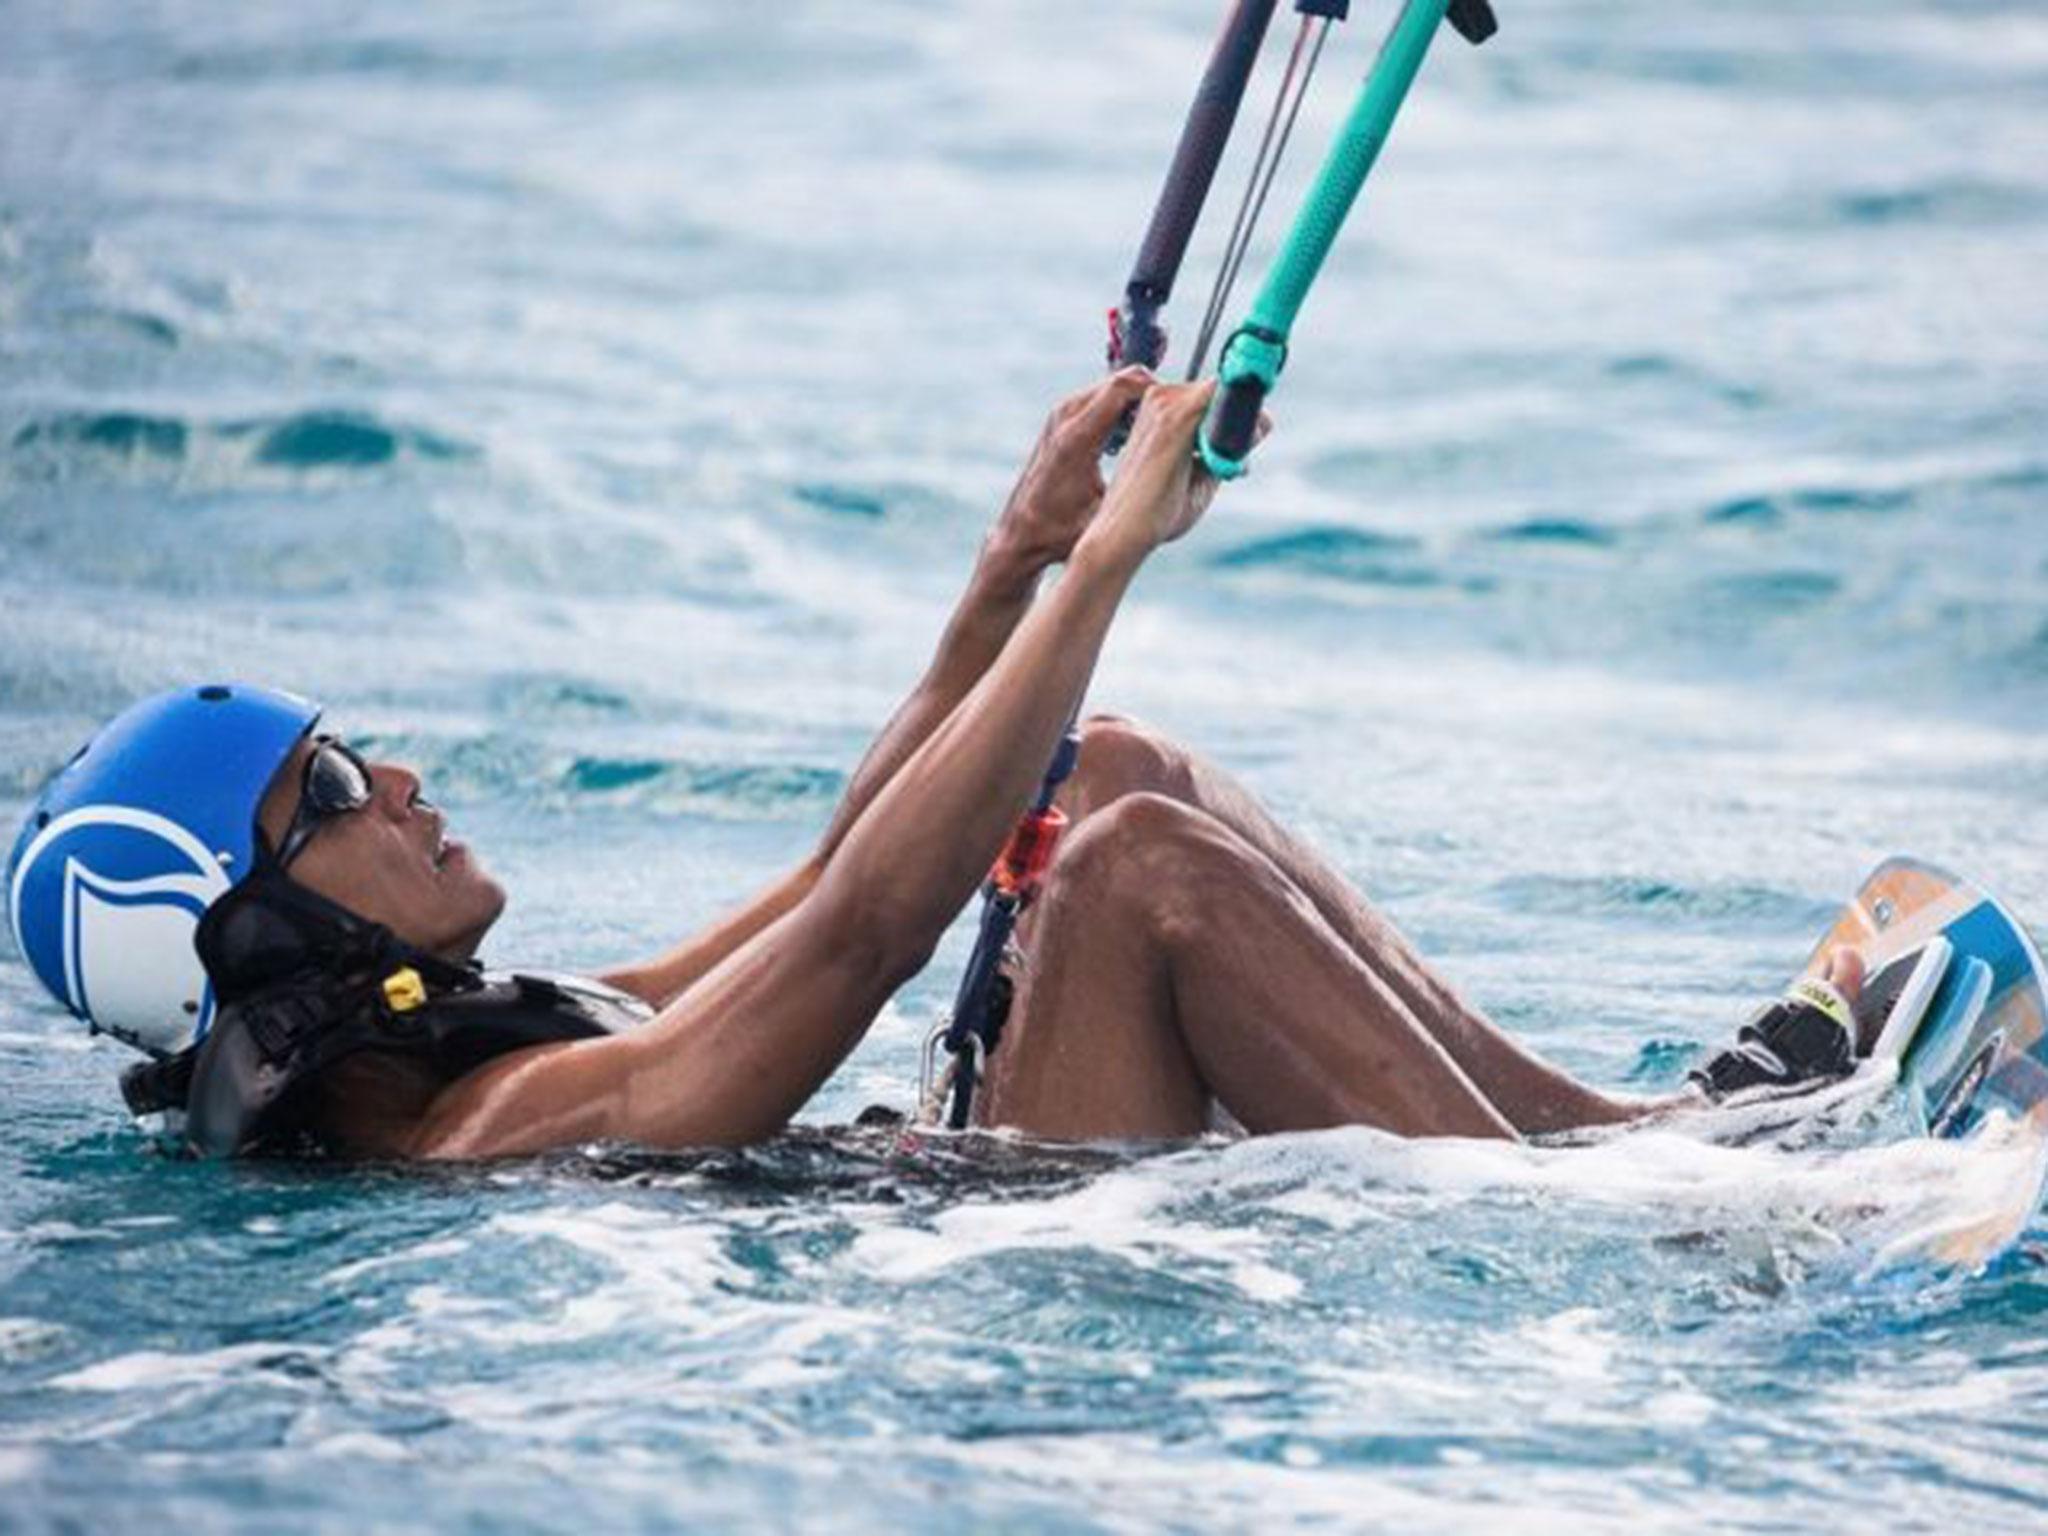 Mr Obama prepares to kite surf